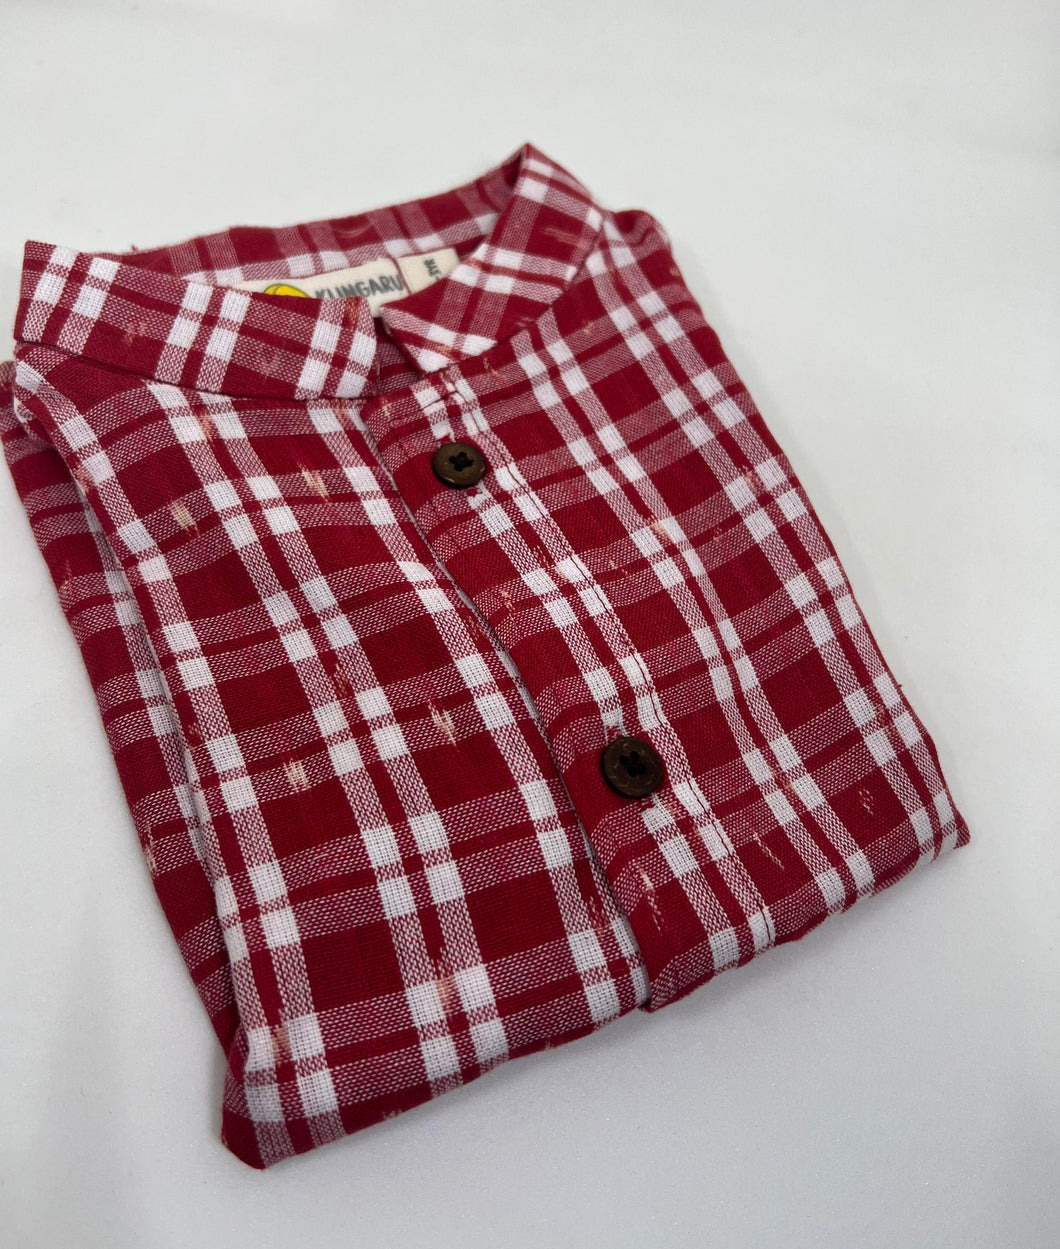 Klingaru Shirt - Red Checks in Ikat